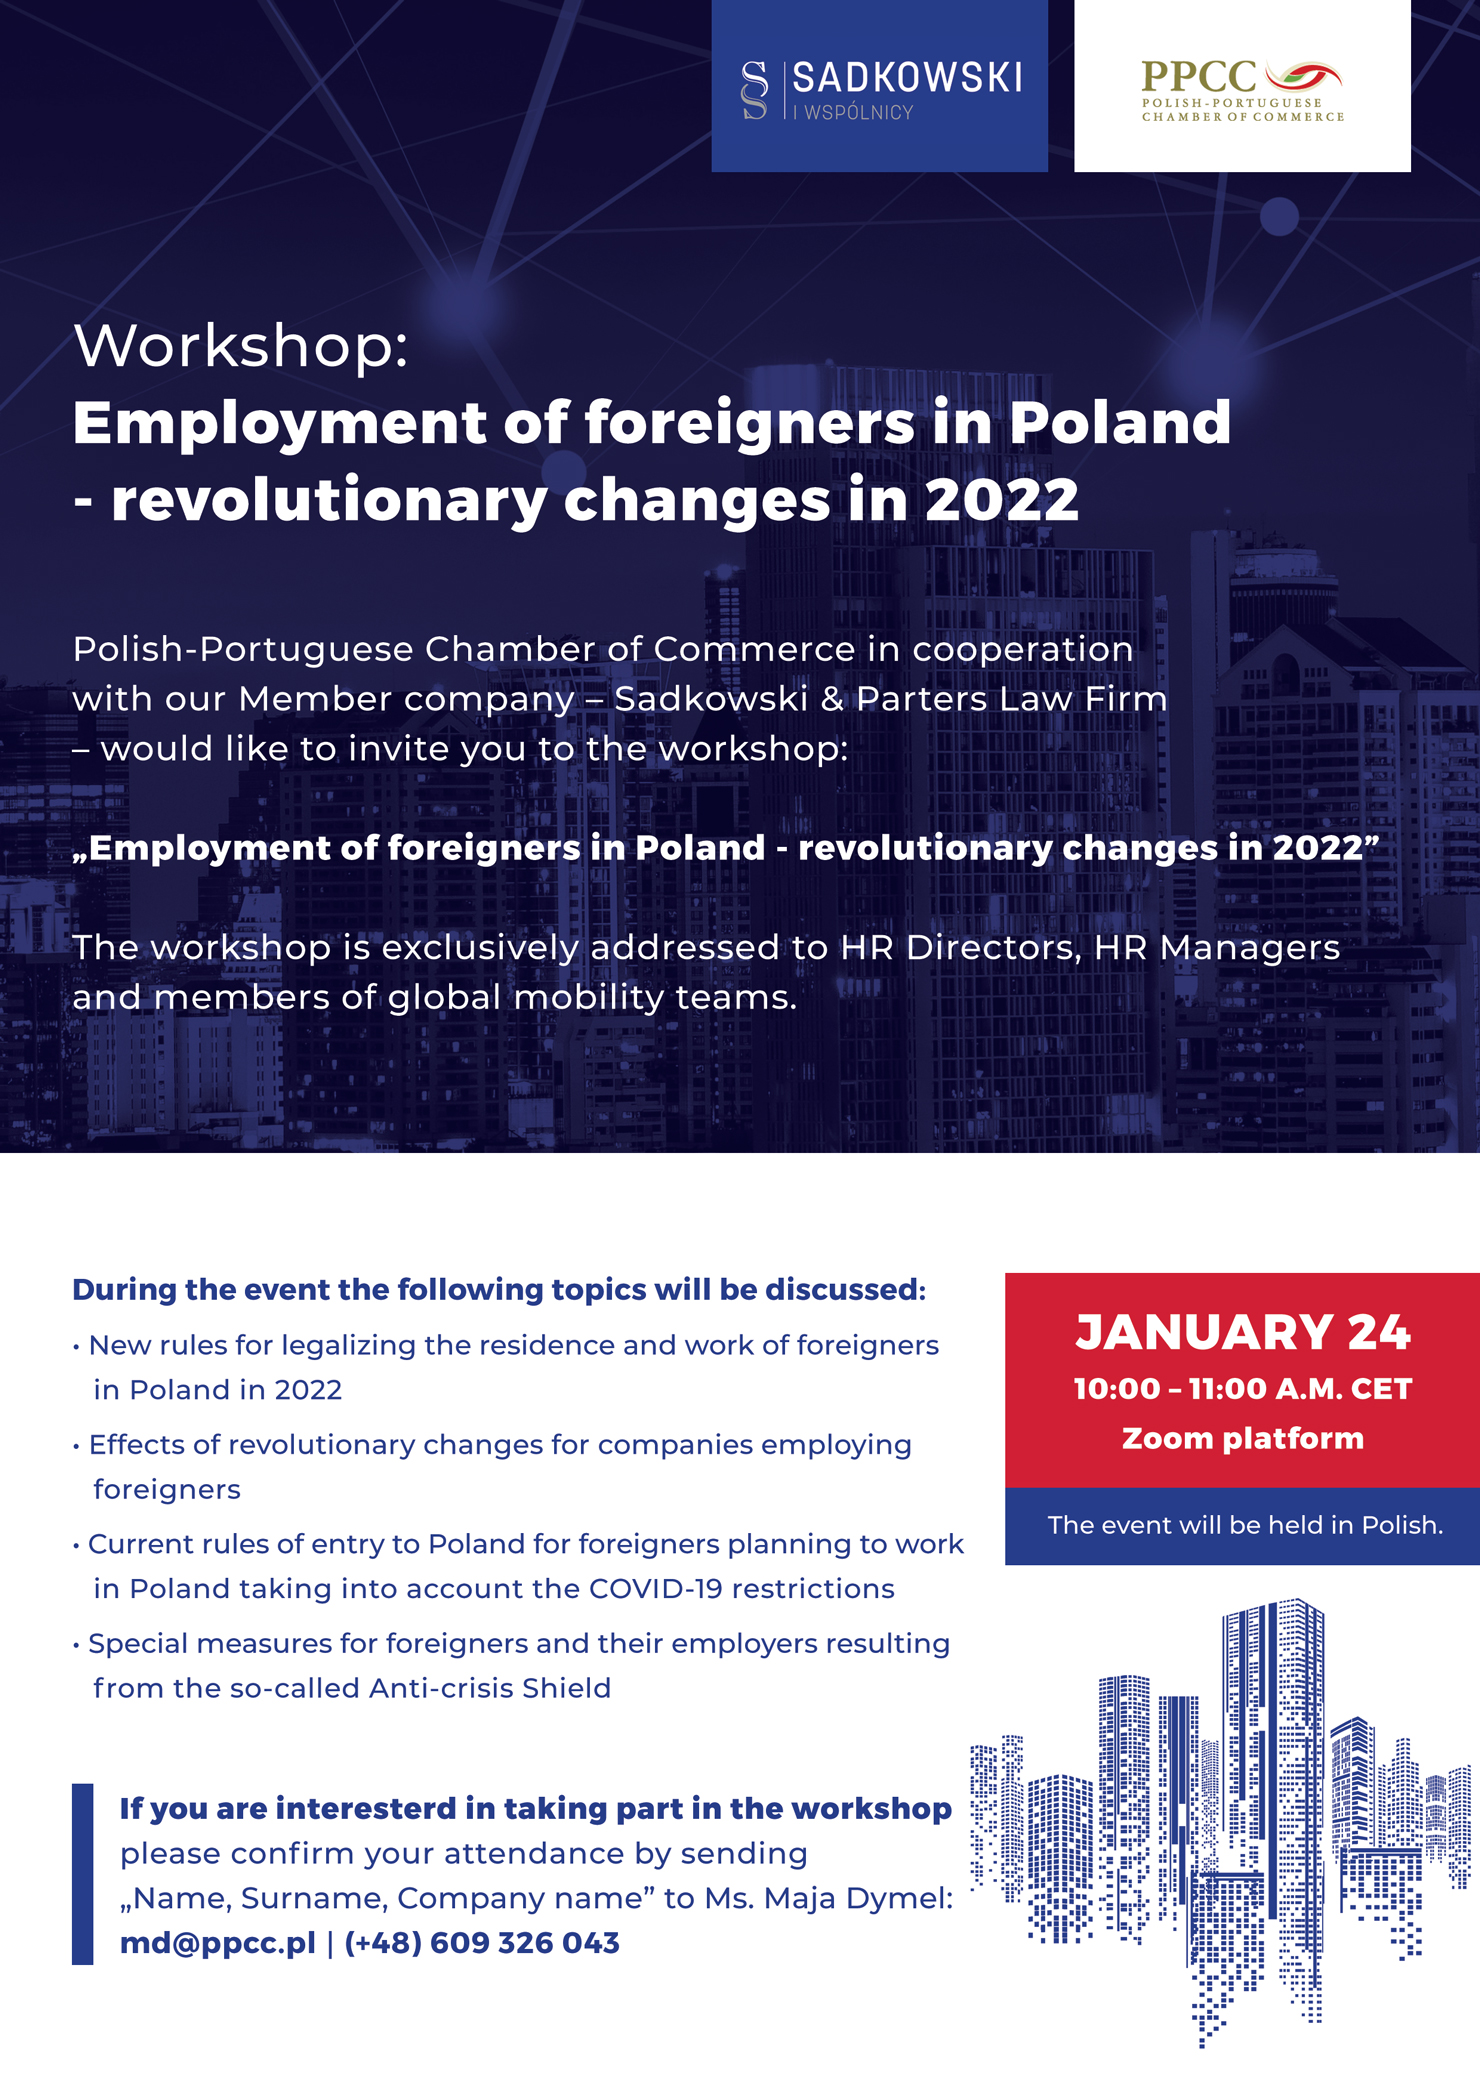 "Employment of foreigners in Poland - revolutionary changes in 2022" Sadkowski i Wspólnicy workshop